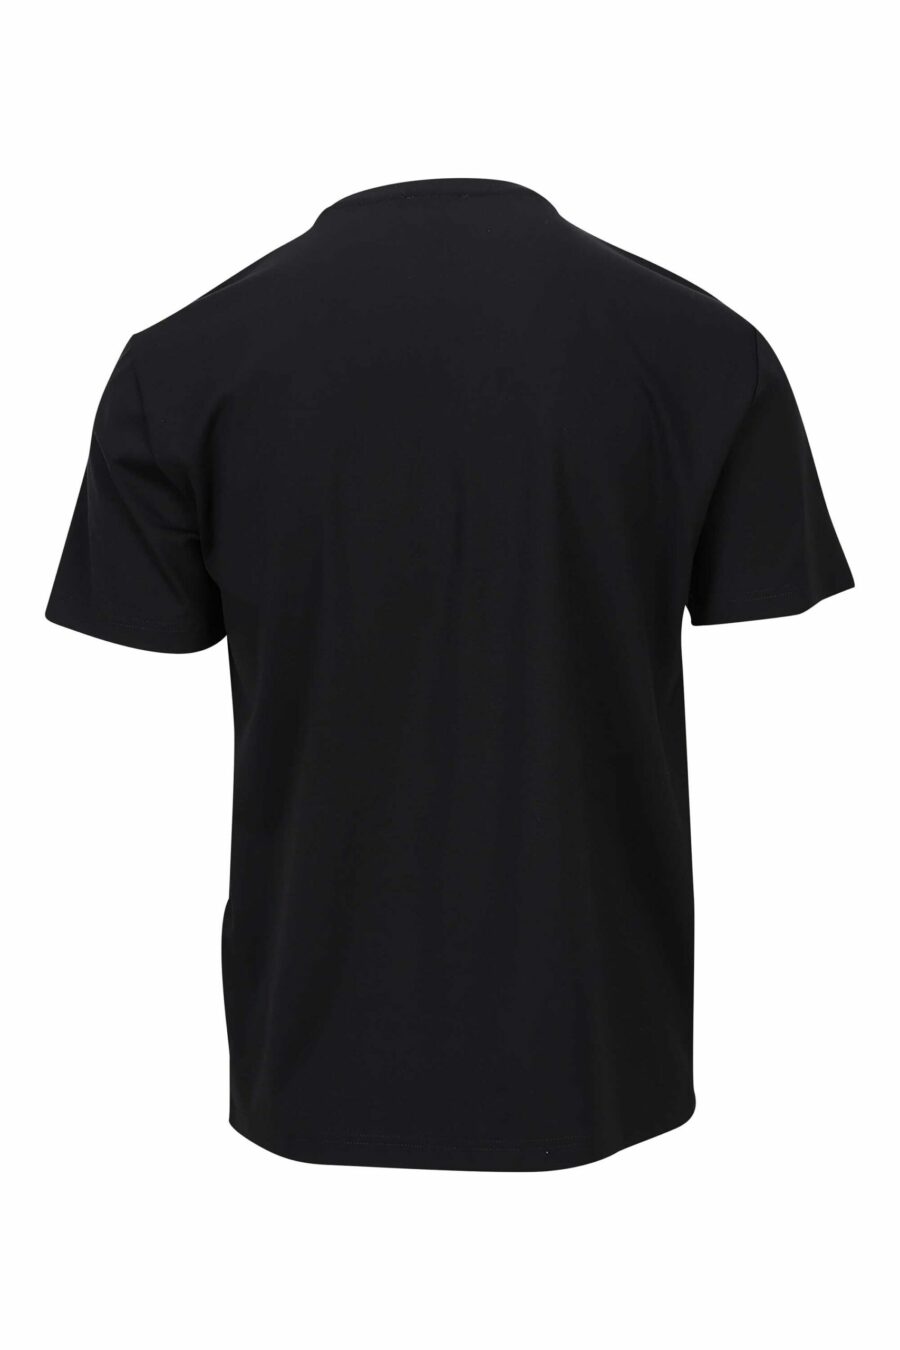 Camiseta negra con maxilogo monocromático "lux identity" - 8057767688646 1 scaled